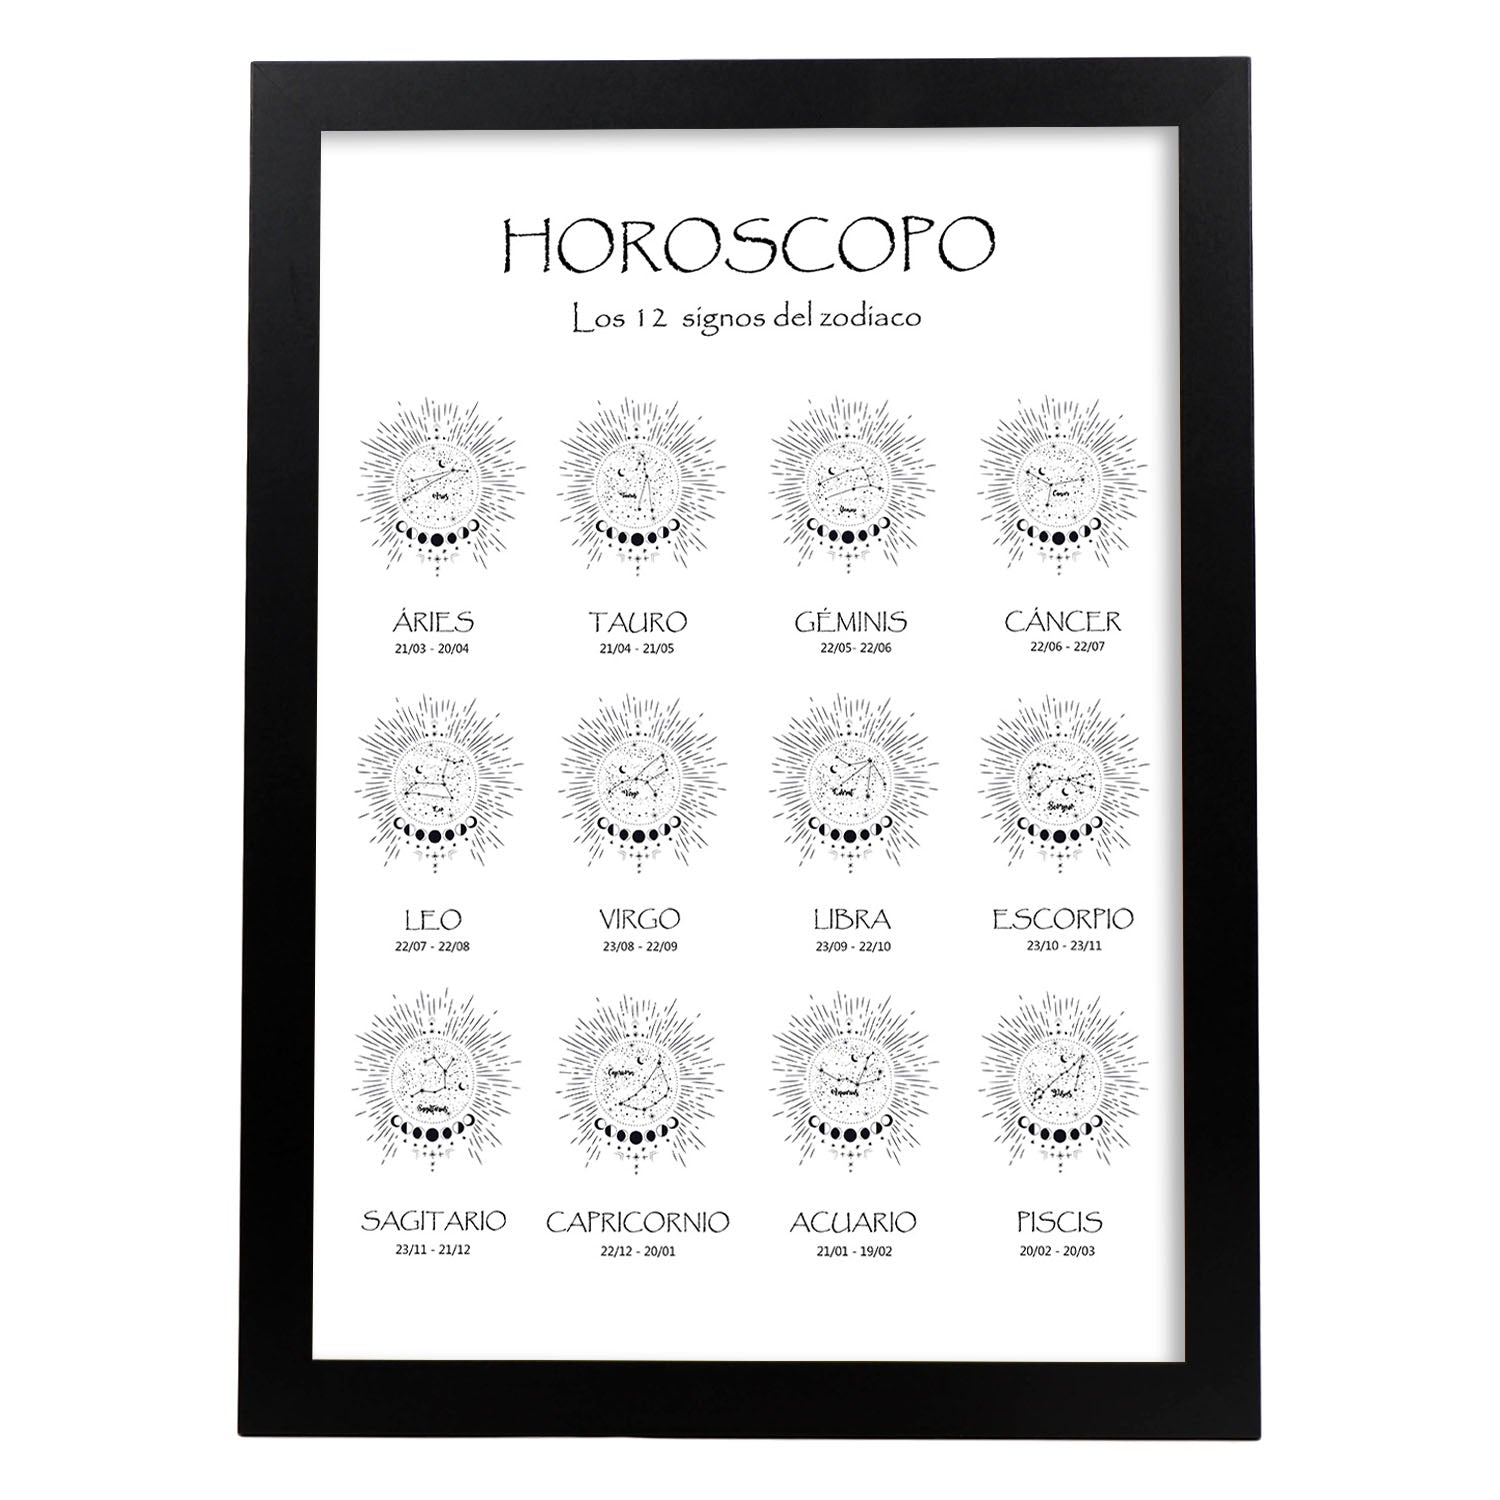 Poster de Horoscopos en español. Lamina de horoscopos y astrología.-Artwork-Nacnic-A3-Marco Negro-Nacnic Estudio SL